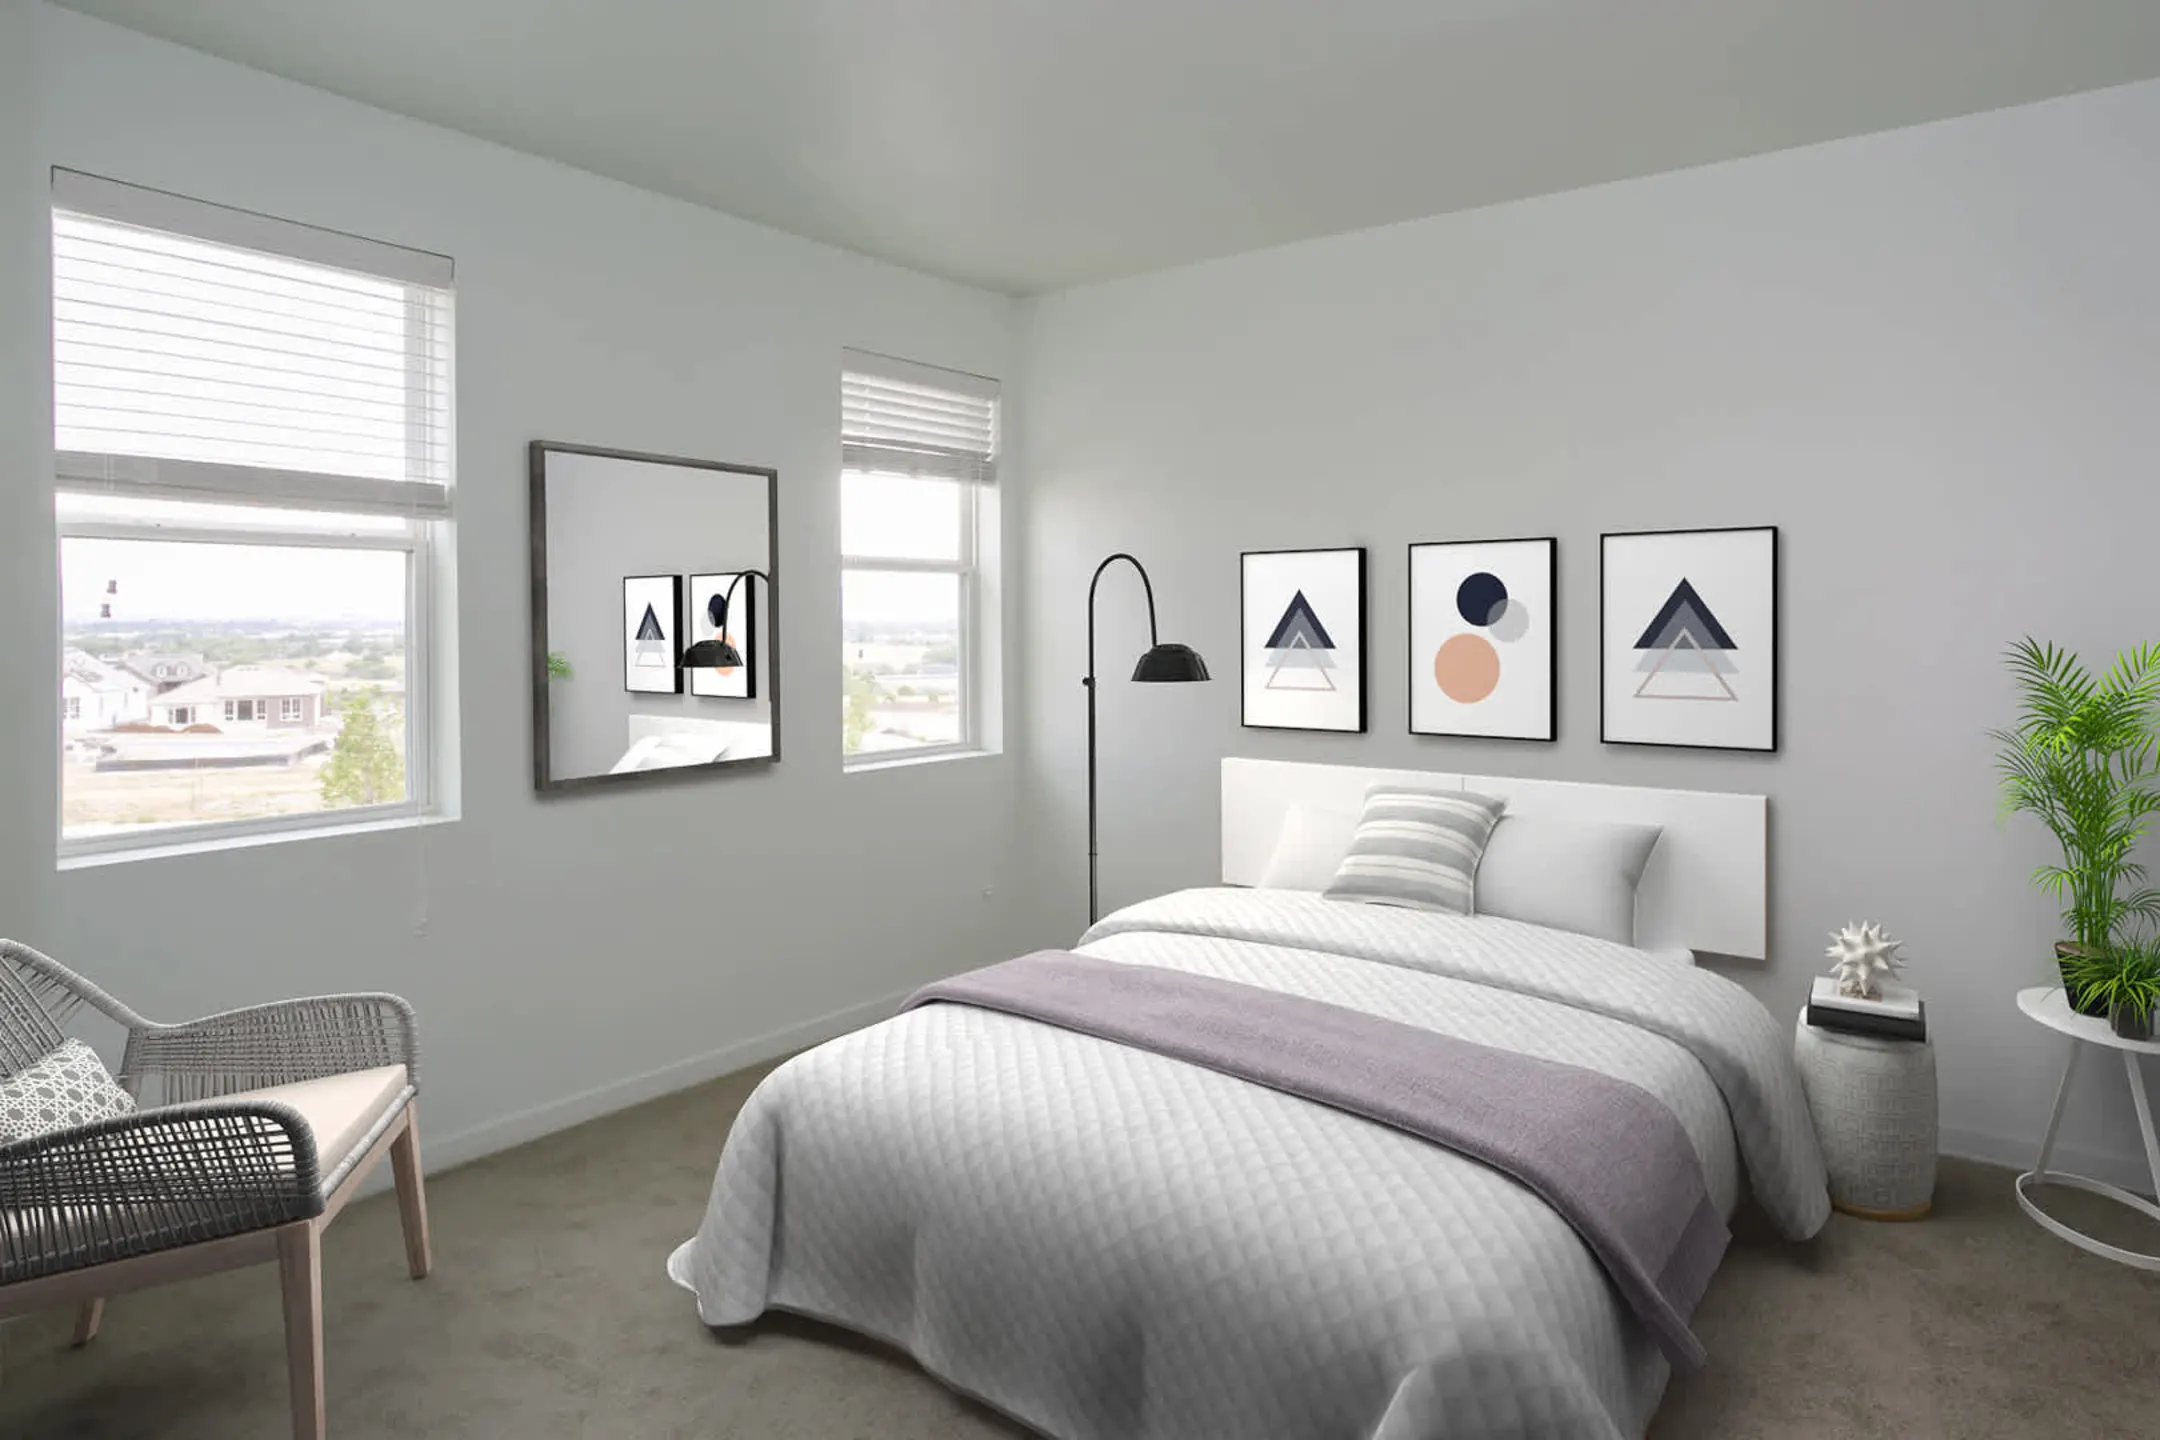 Bedroom - The Brodie - Westminster, CO